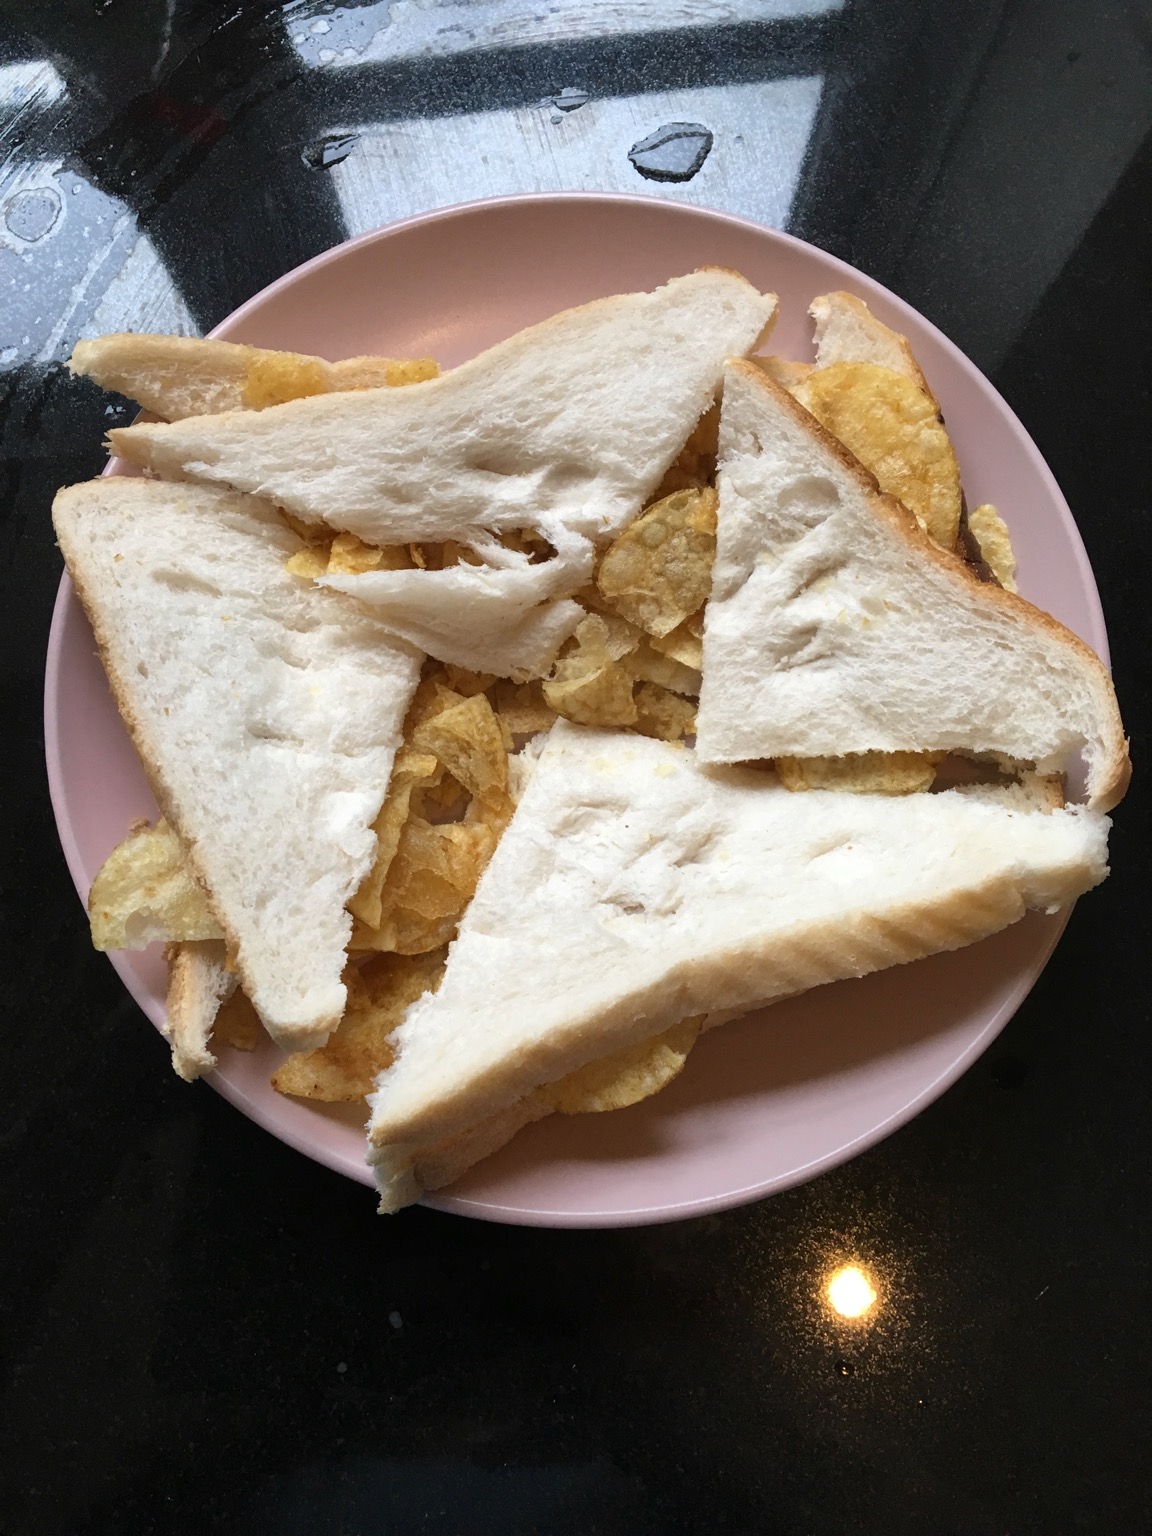 White crisp sandwich sliced into quarters